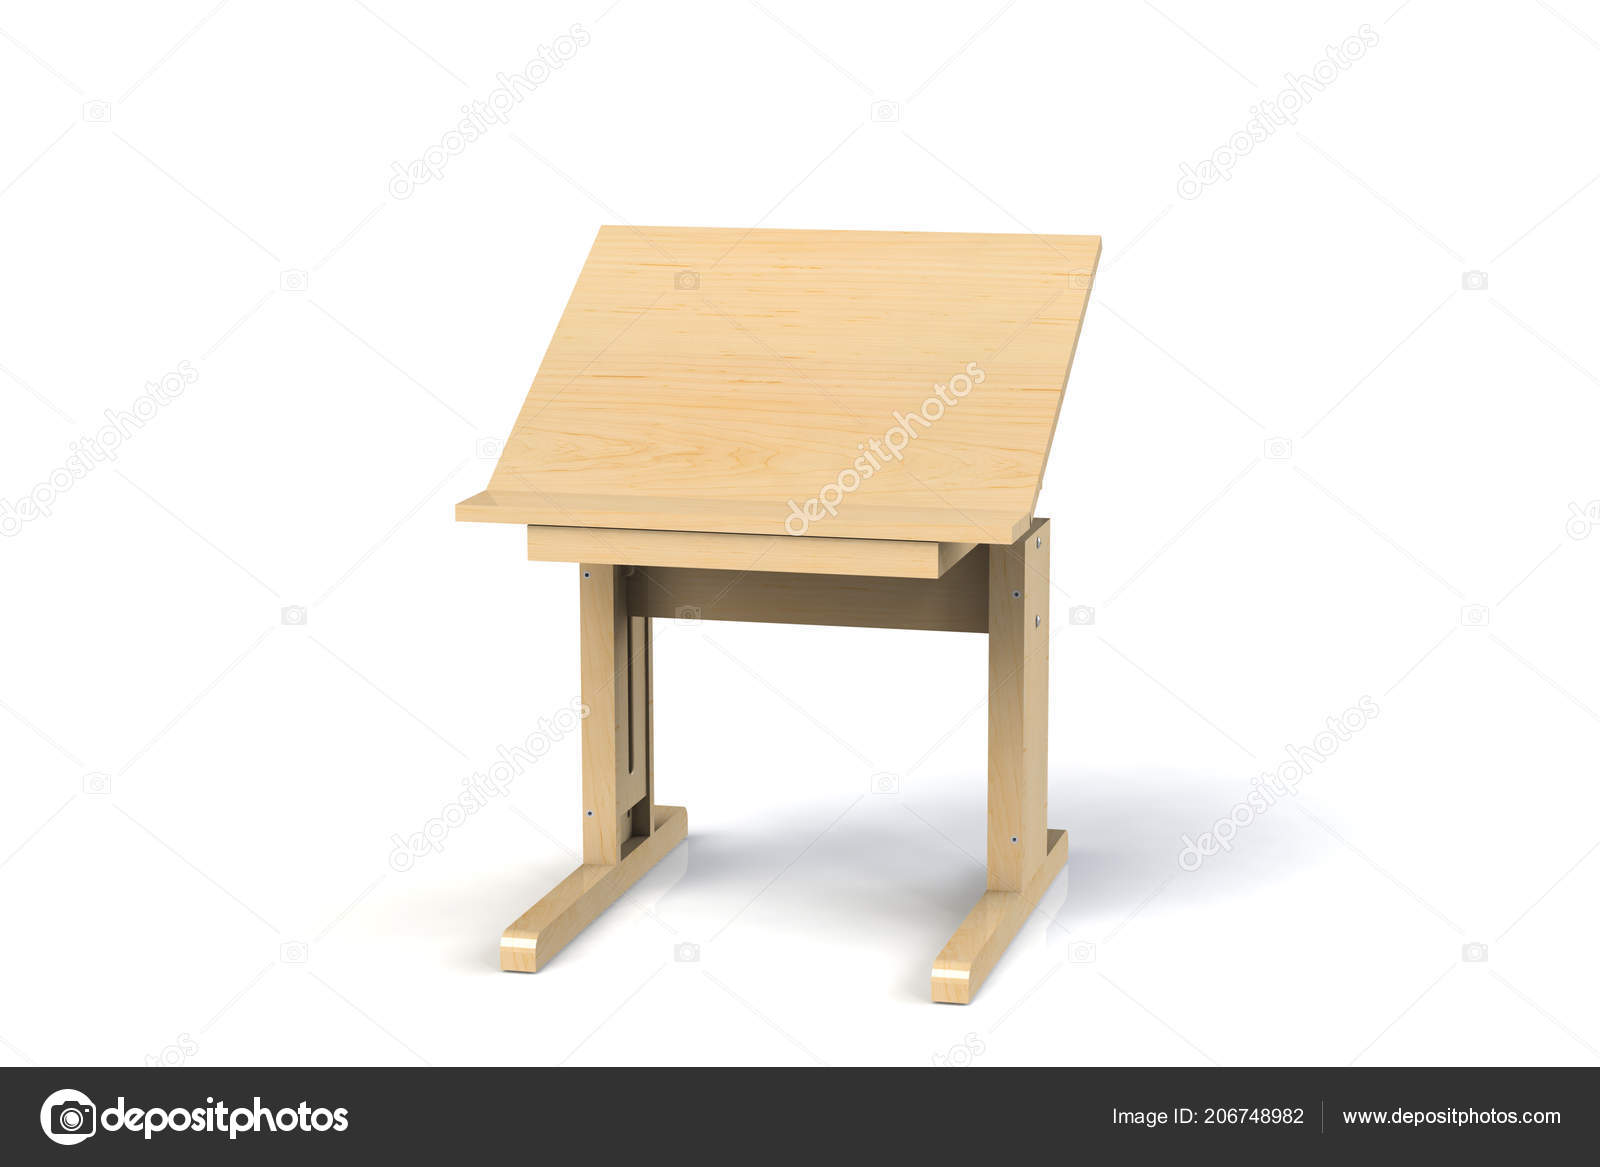 adjustable height children's table